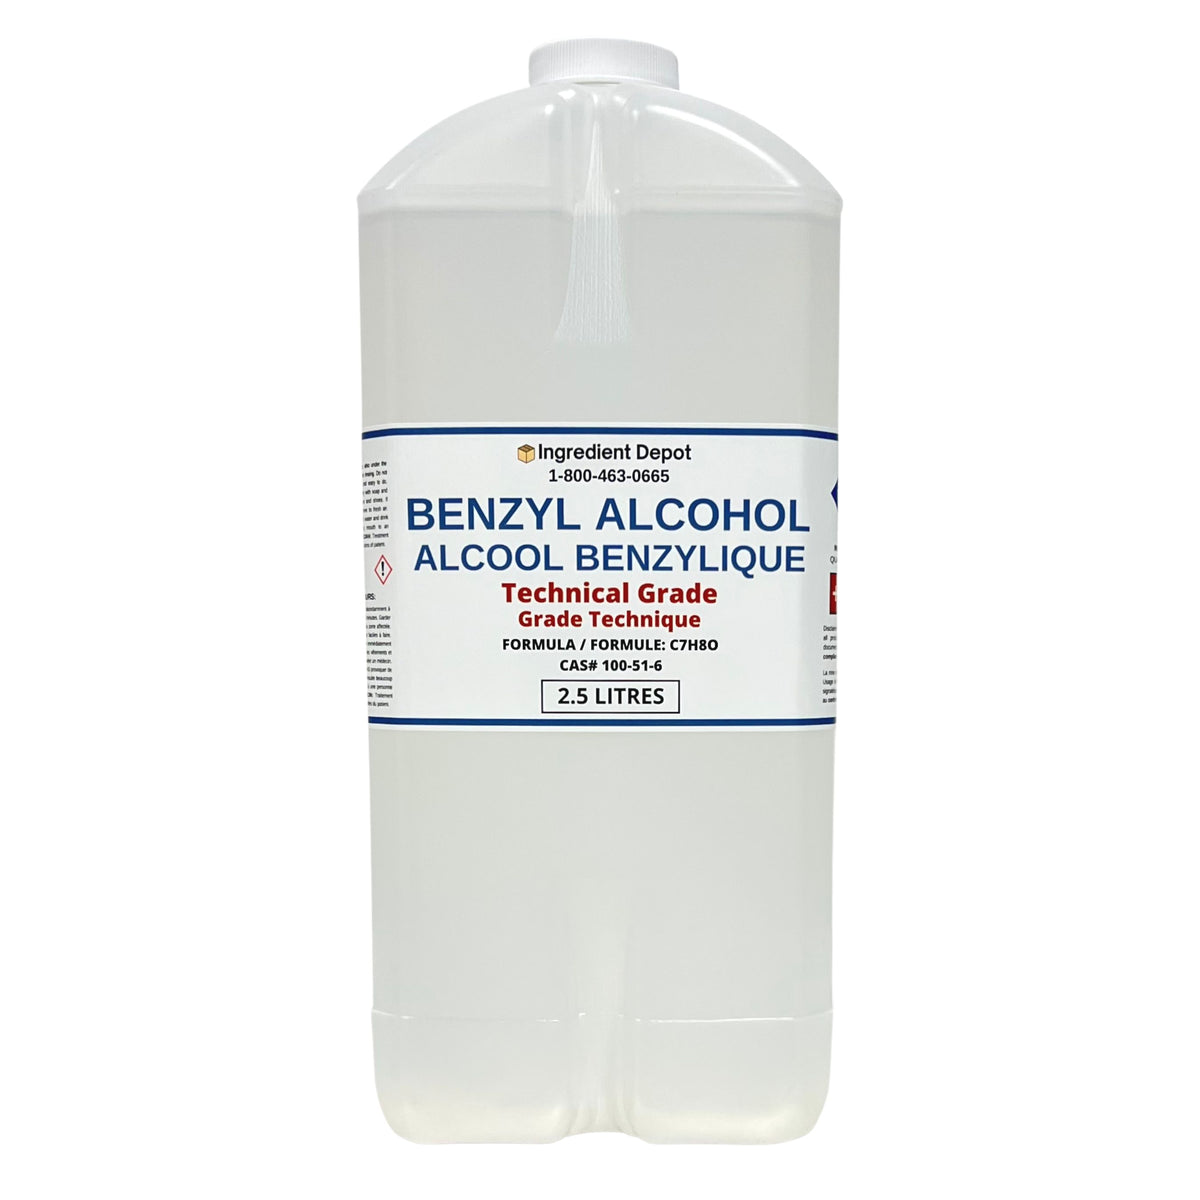 Benzyl Alcohol Technical Grade 2.5 litres